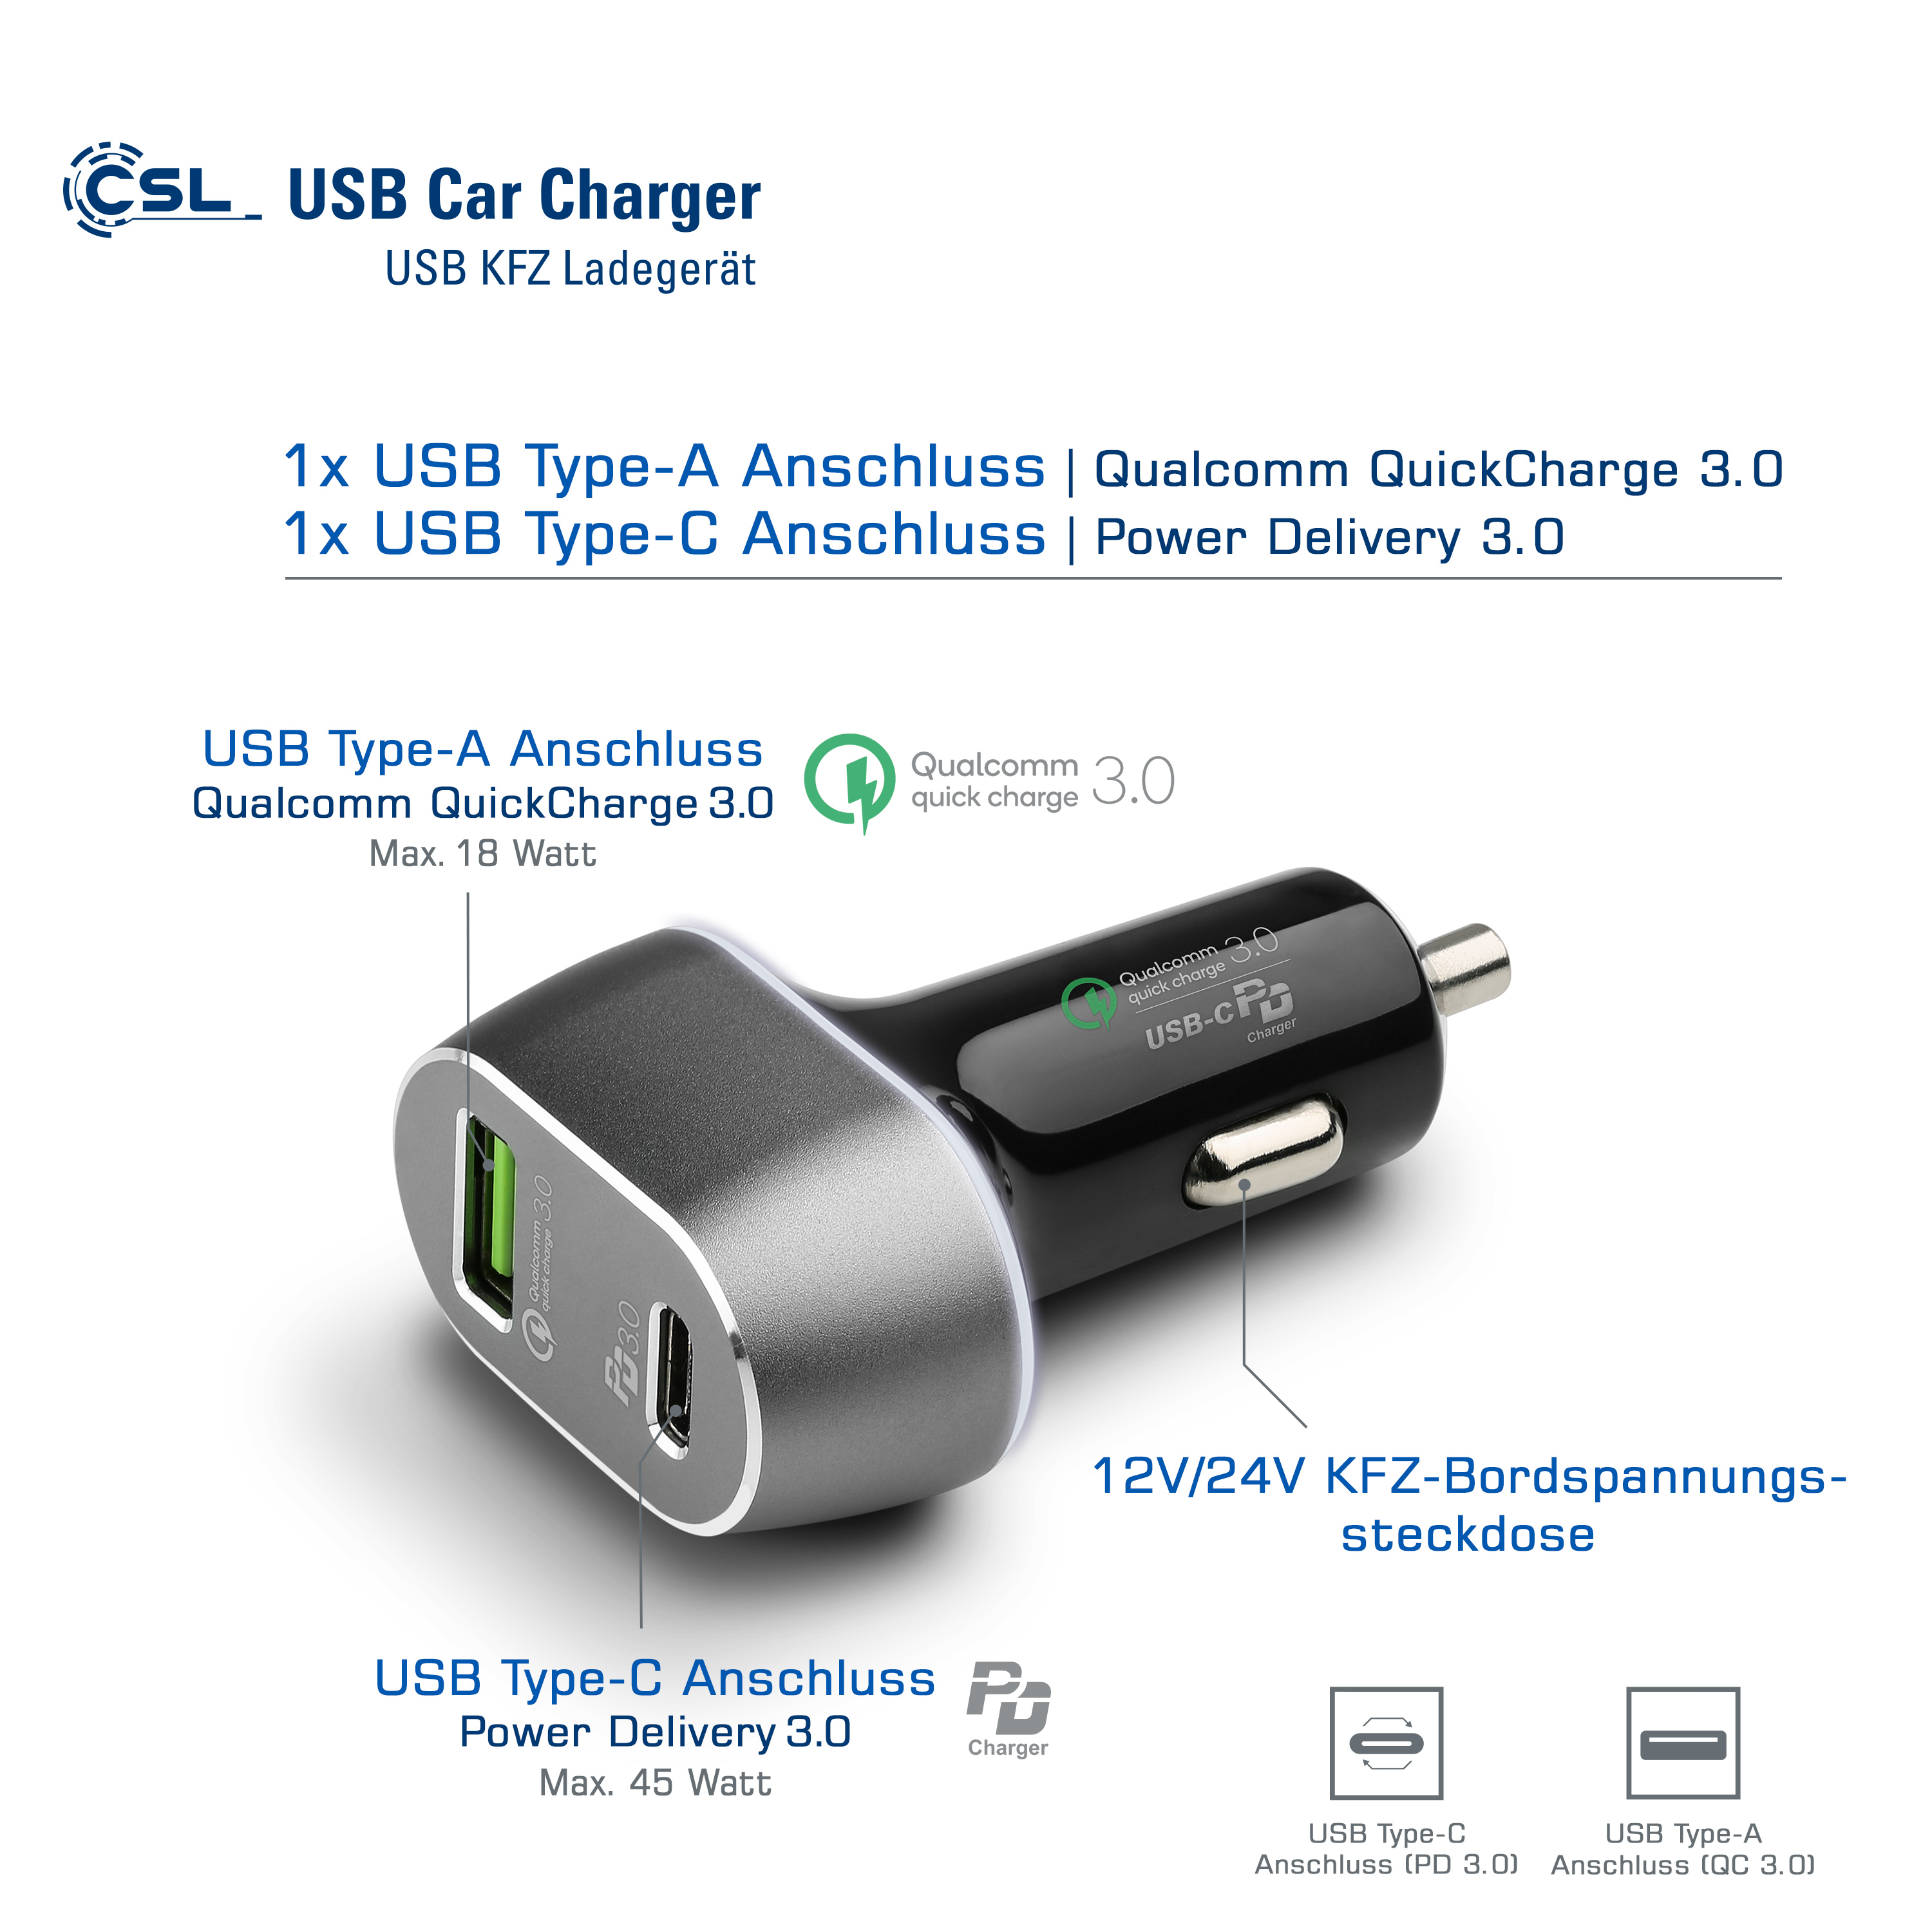 USB 2-Port Ladegerät Charger KFZ CSL Universal, Car 63W silber-schwarz USB LED